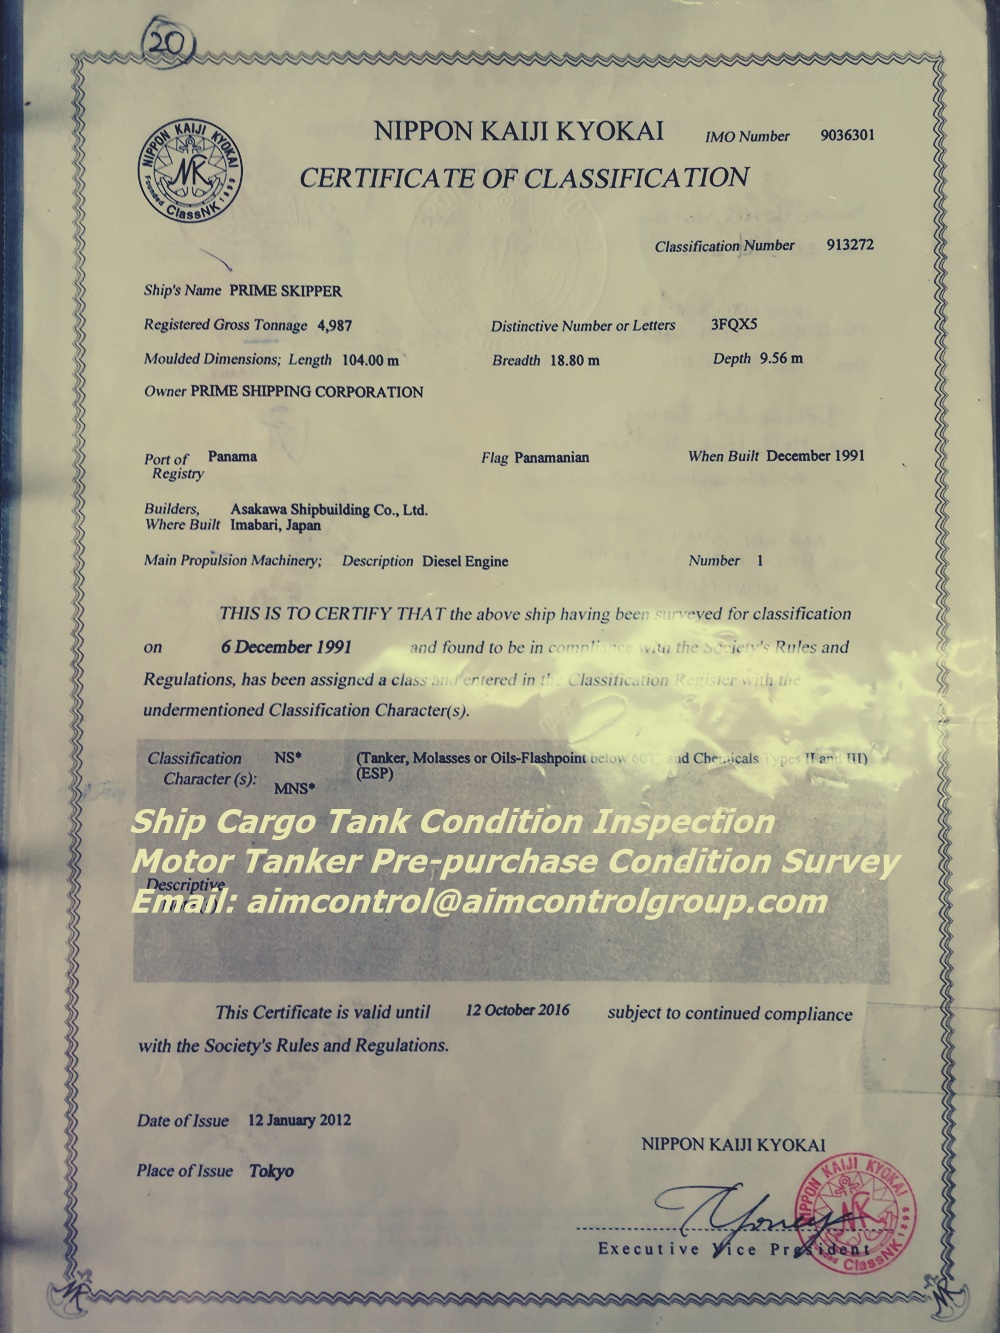 Ship_Cargo_Tank_Condition_Inspection_Certificate